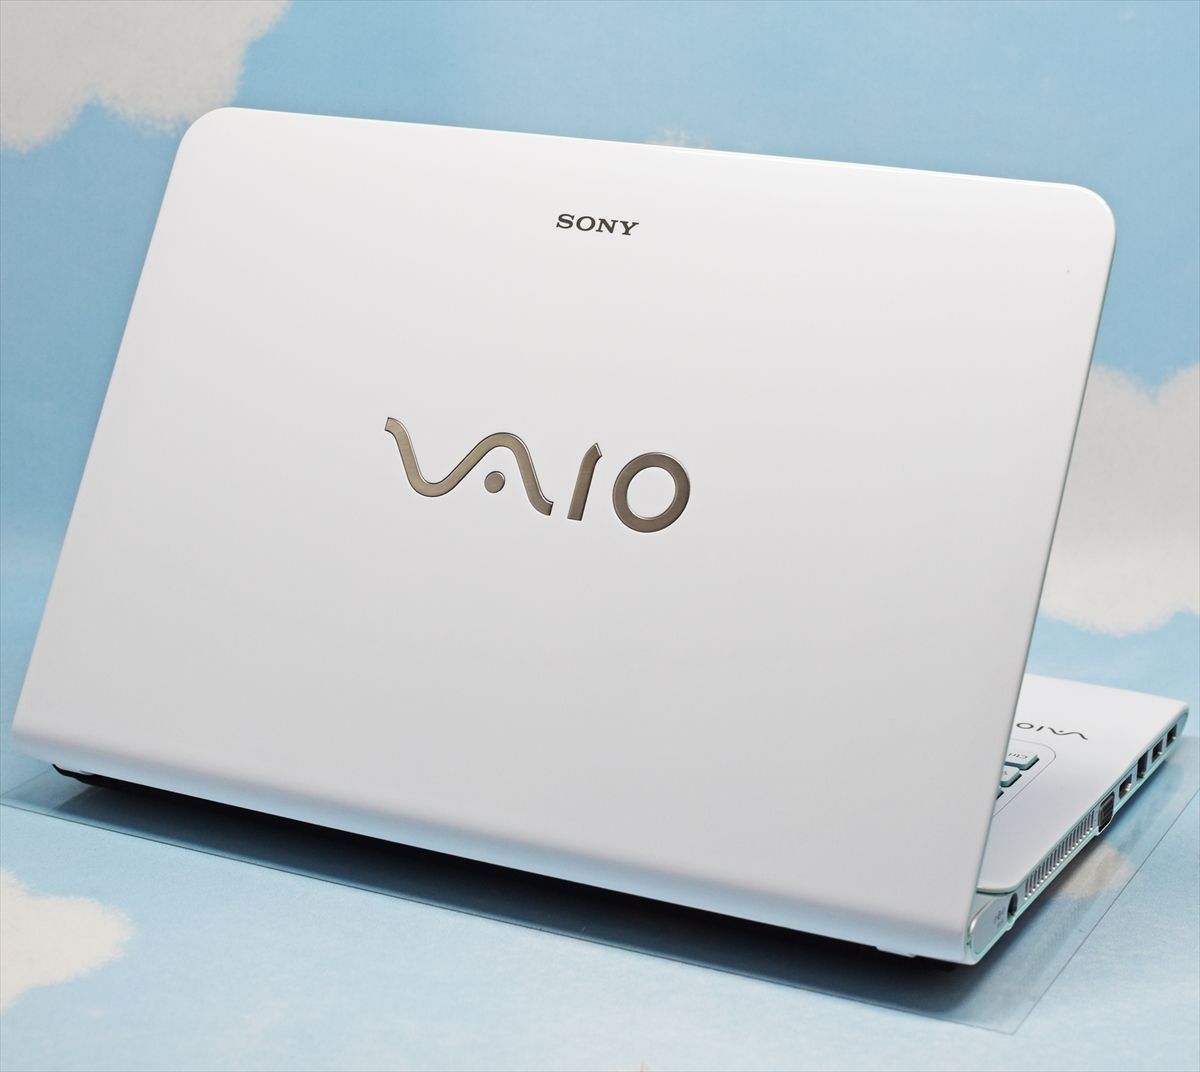 SONY 人気の白VAIO 大容量 500GB HDD Corei5、Bluetooth、カメラ 